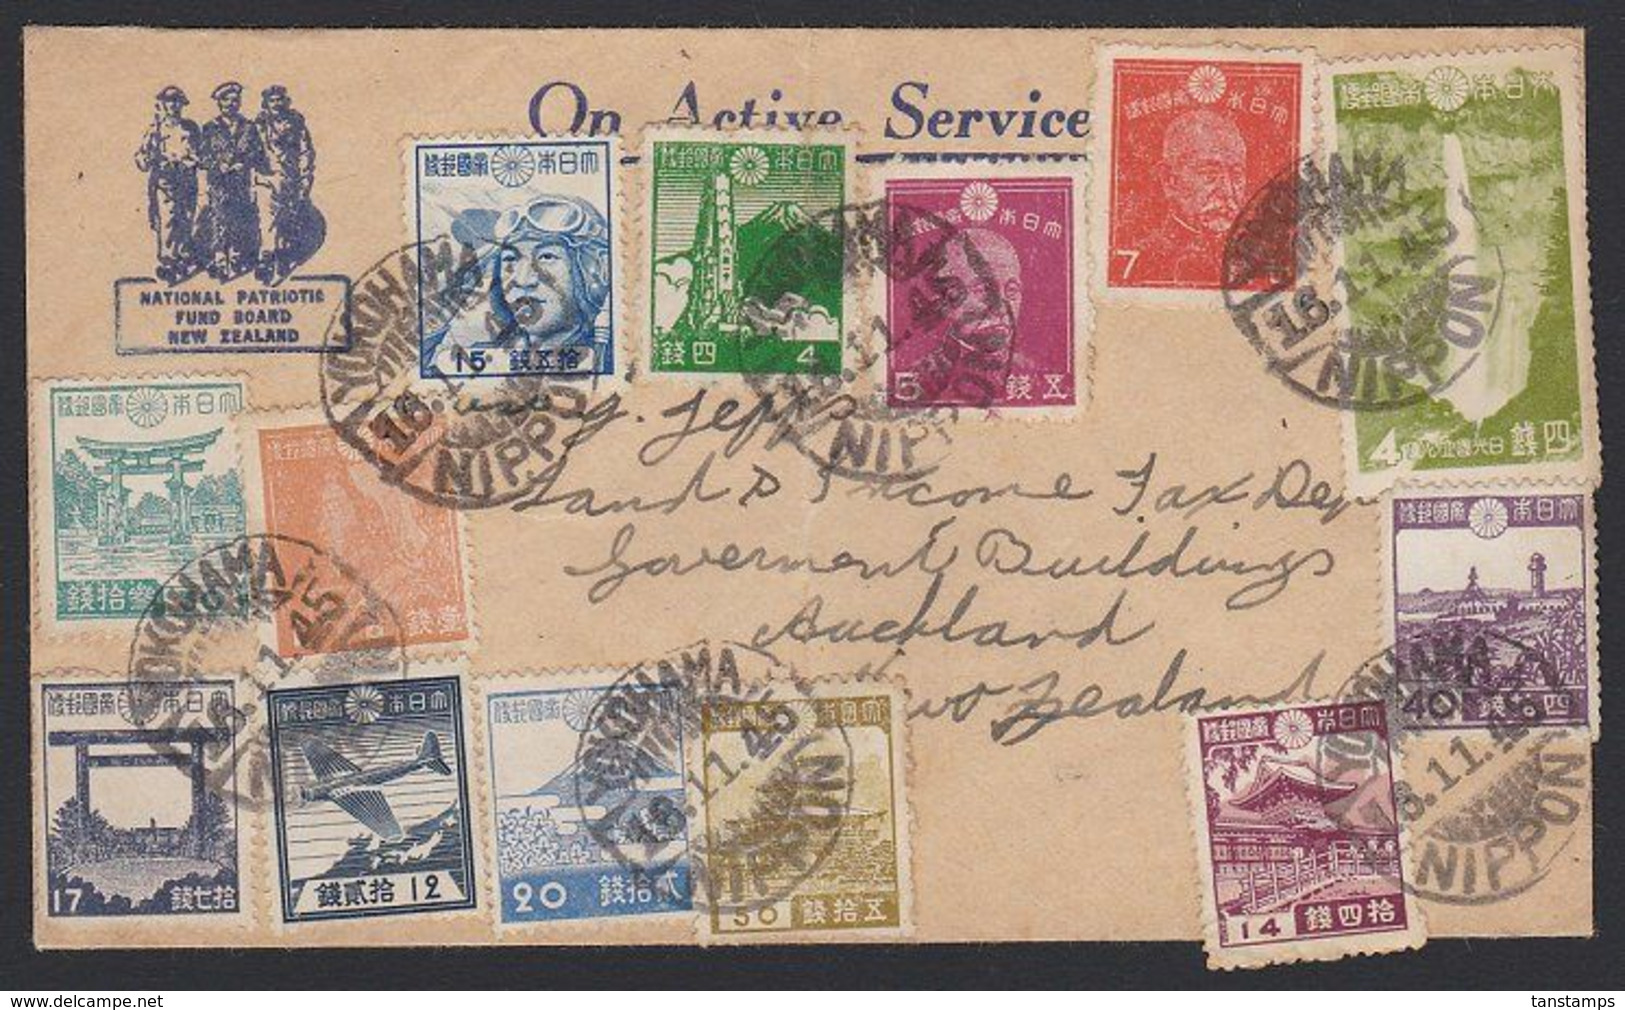 JAPAN - NZ MULTI-FRANKED ON ACTIVE SERVICE COVER 1945 - Briefe U. Dokumente